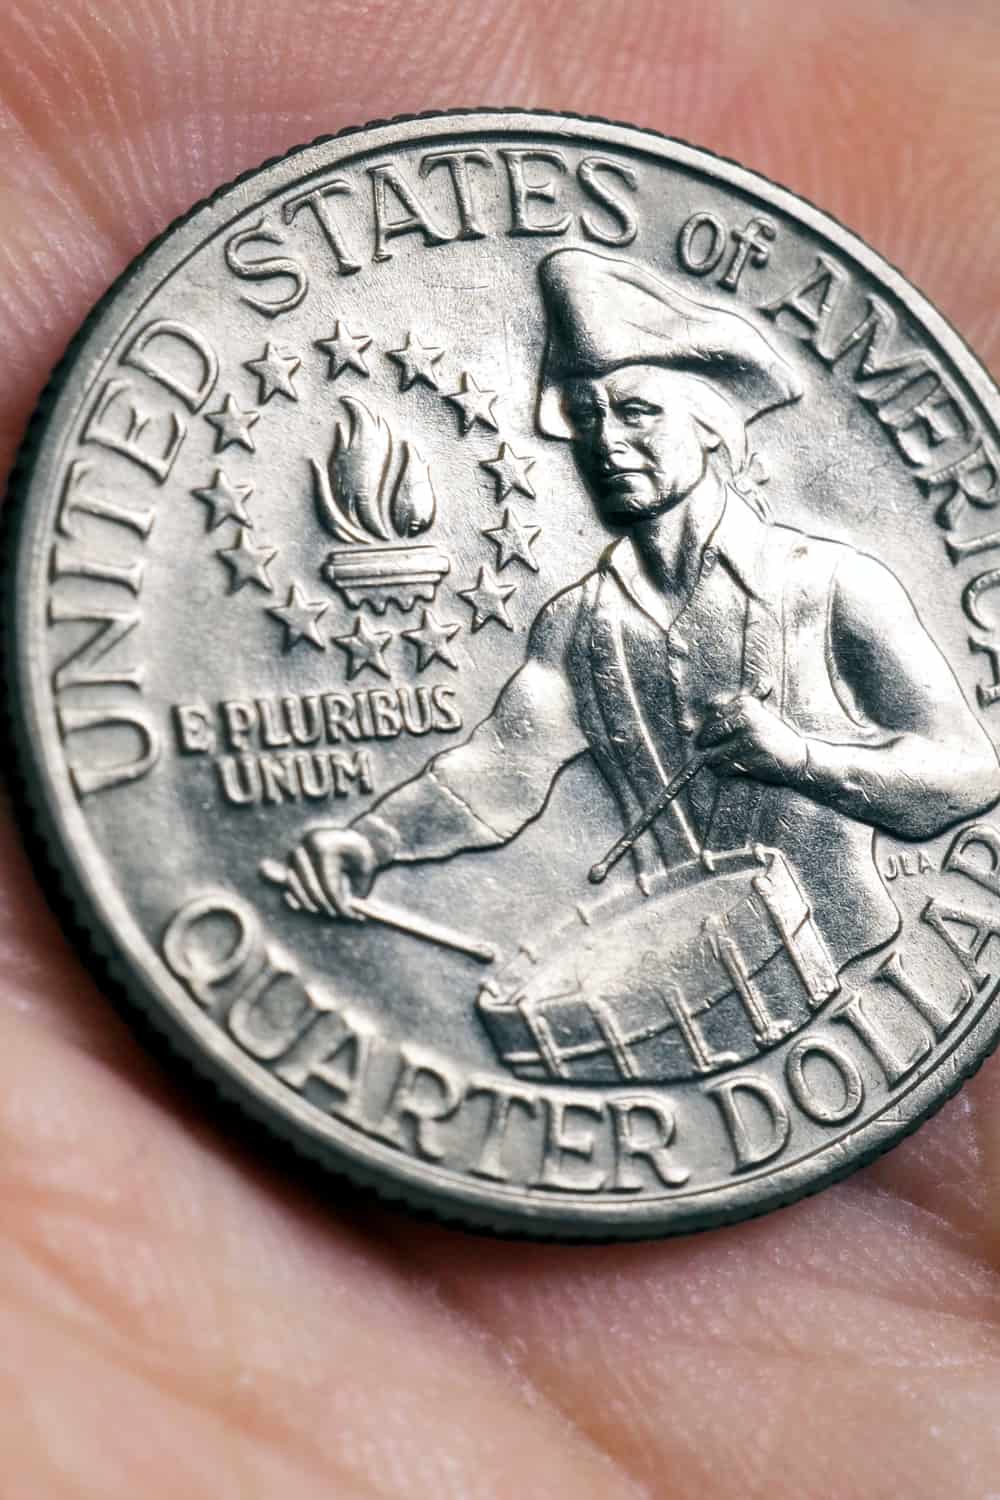 Washington bicentennial quarter value